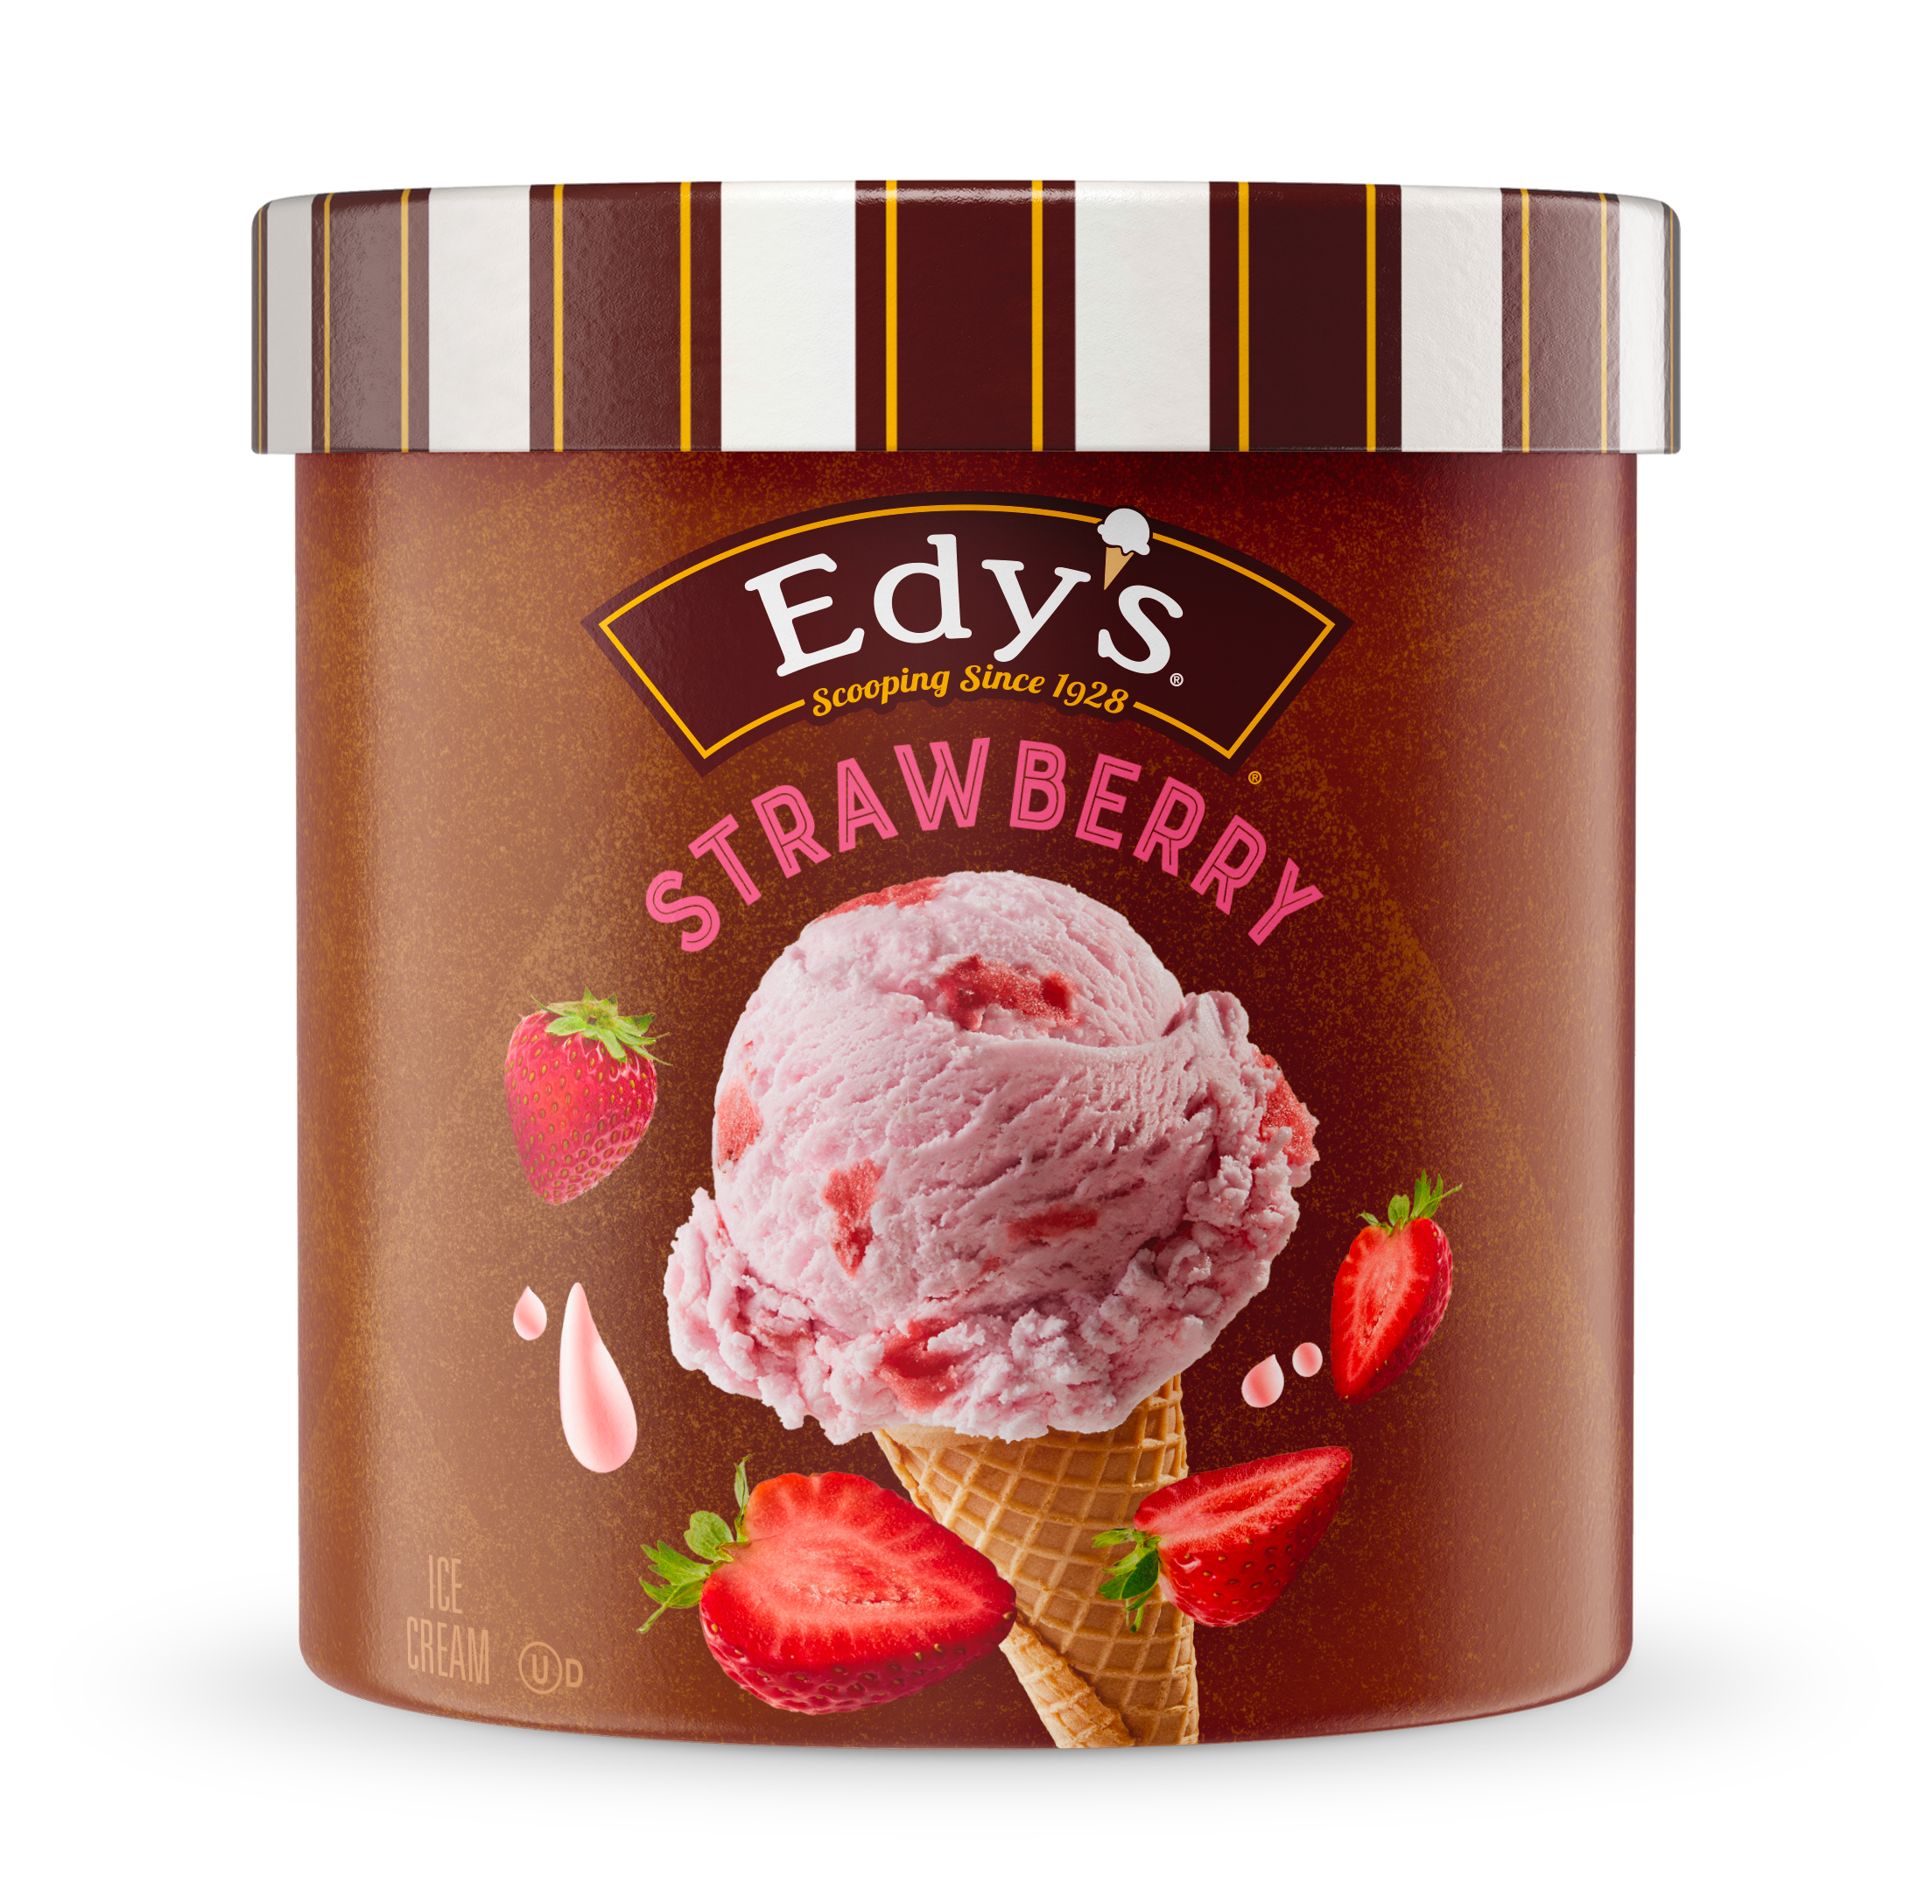 Strawberry ice cream - Wikipedia